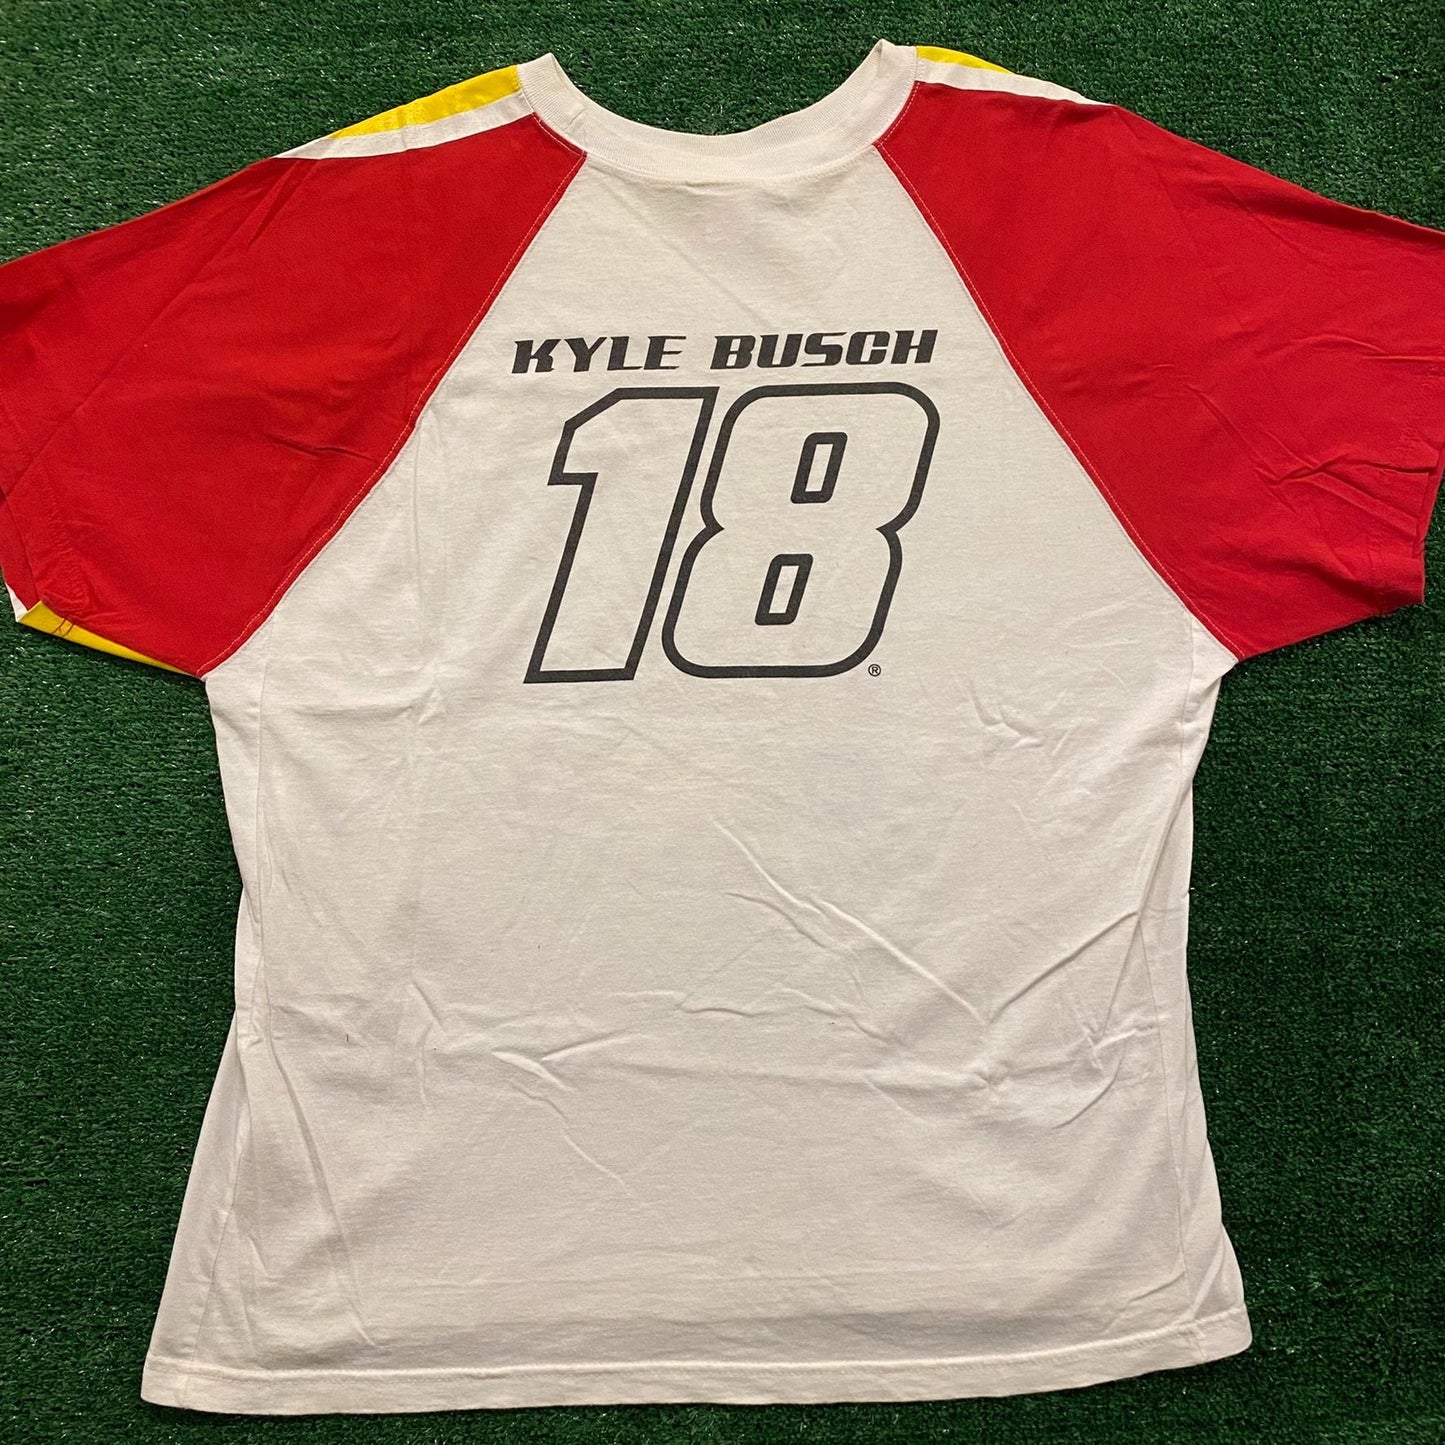 Kyle Busch Vintage NASCAR Racing T-Shirt